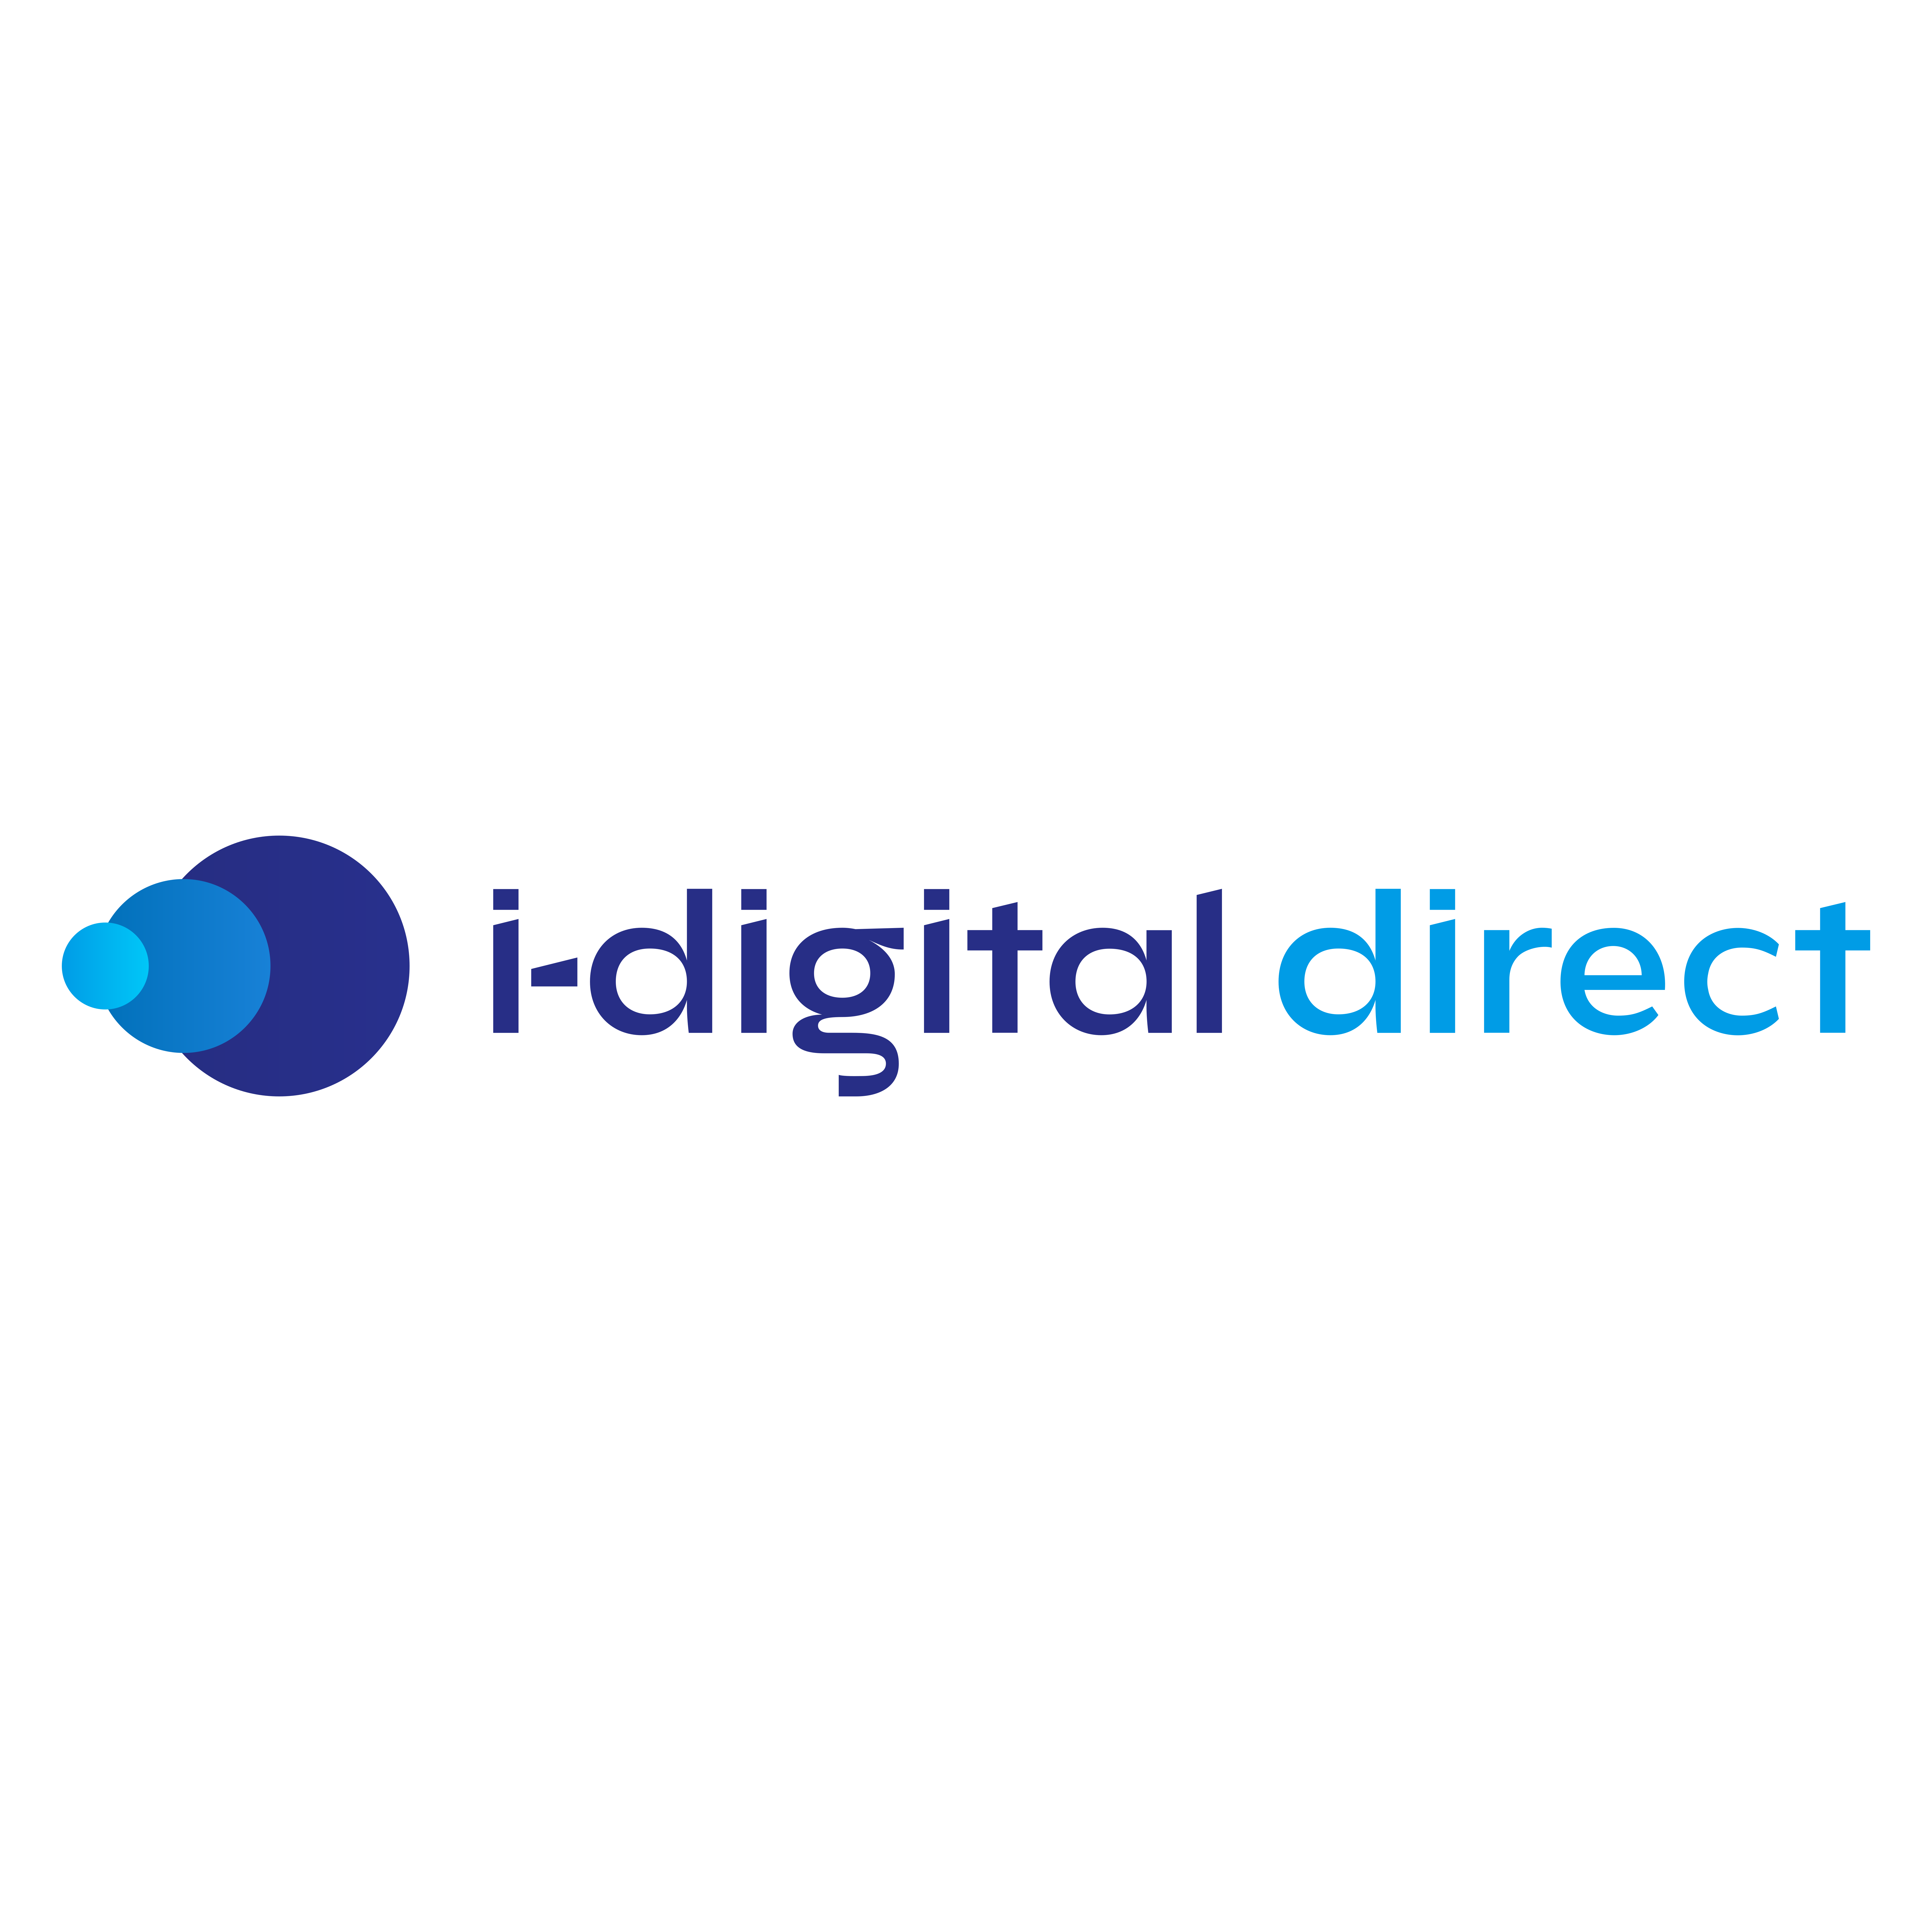 demo i-digital direct